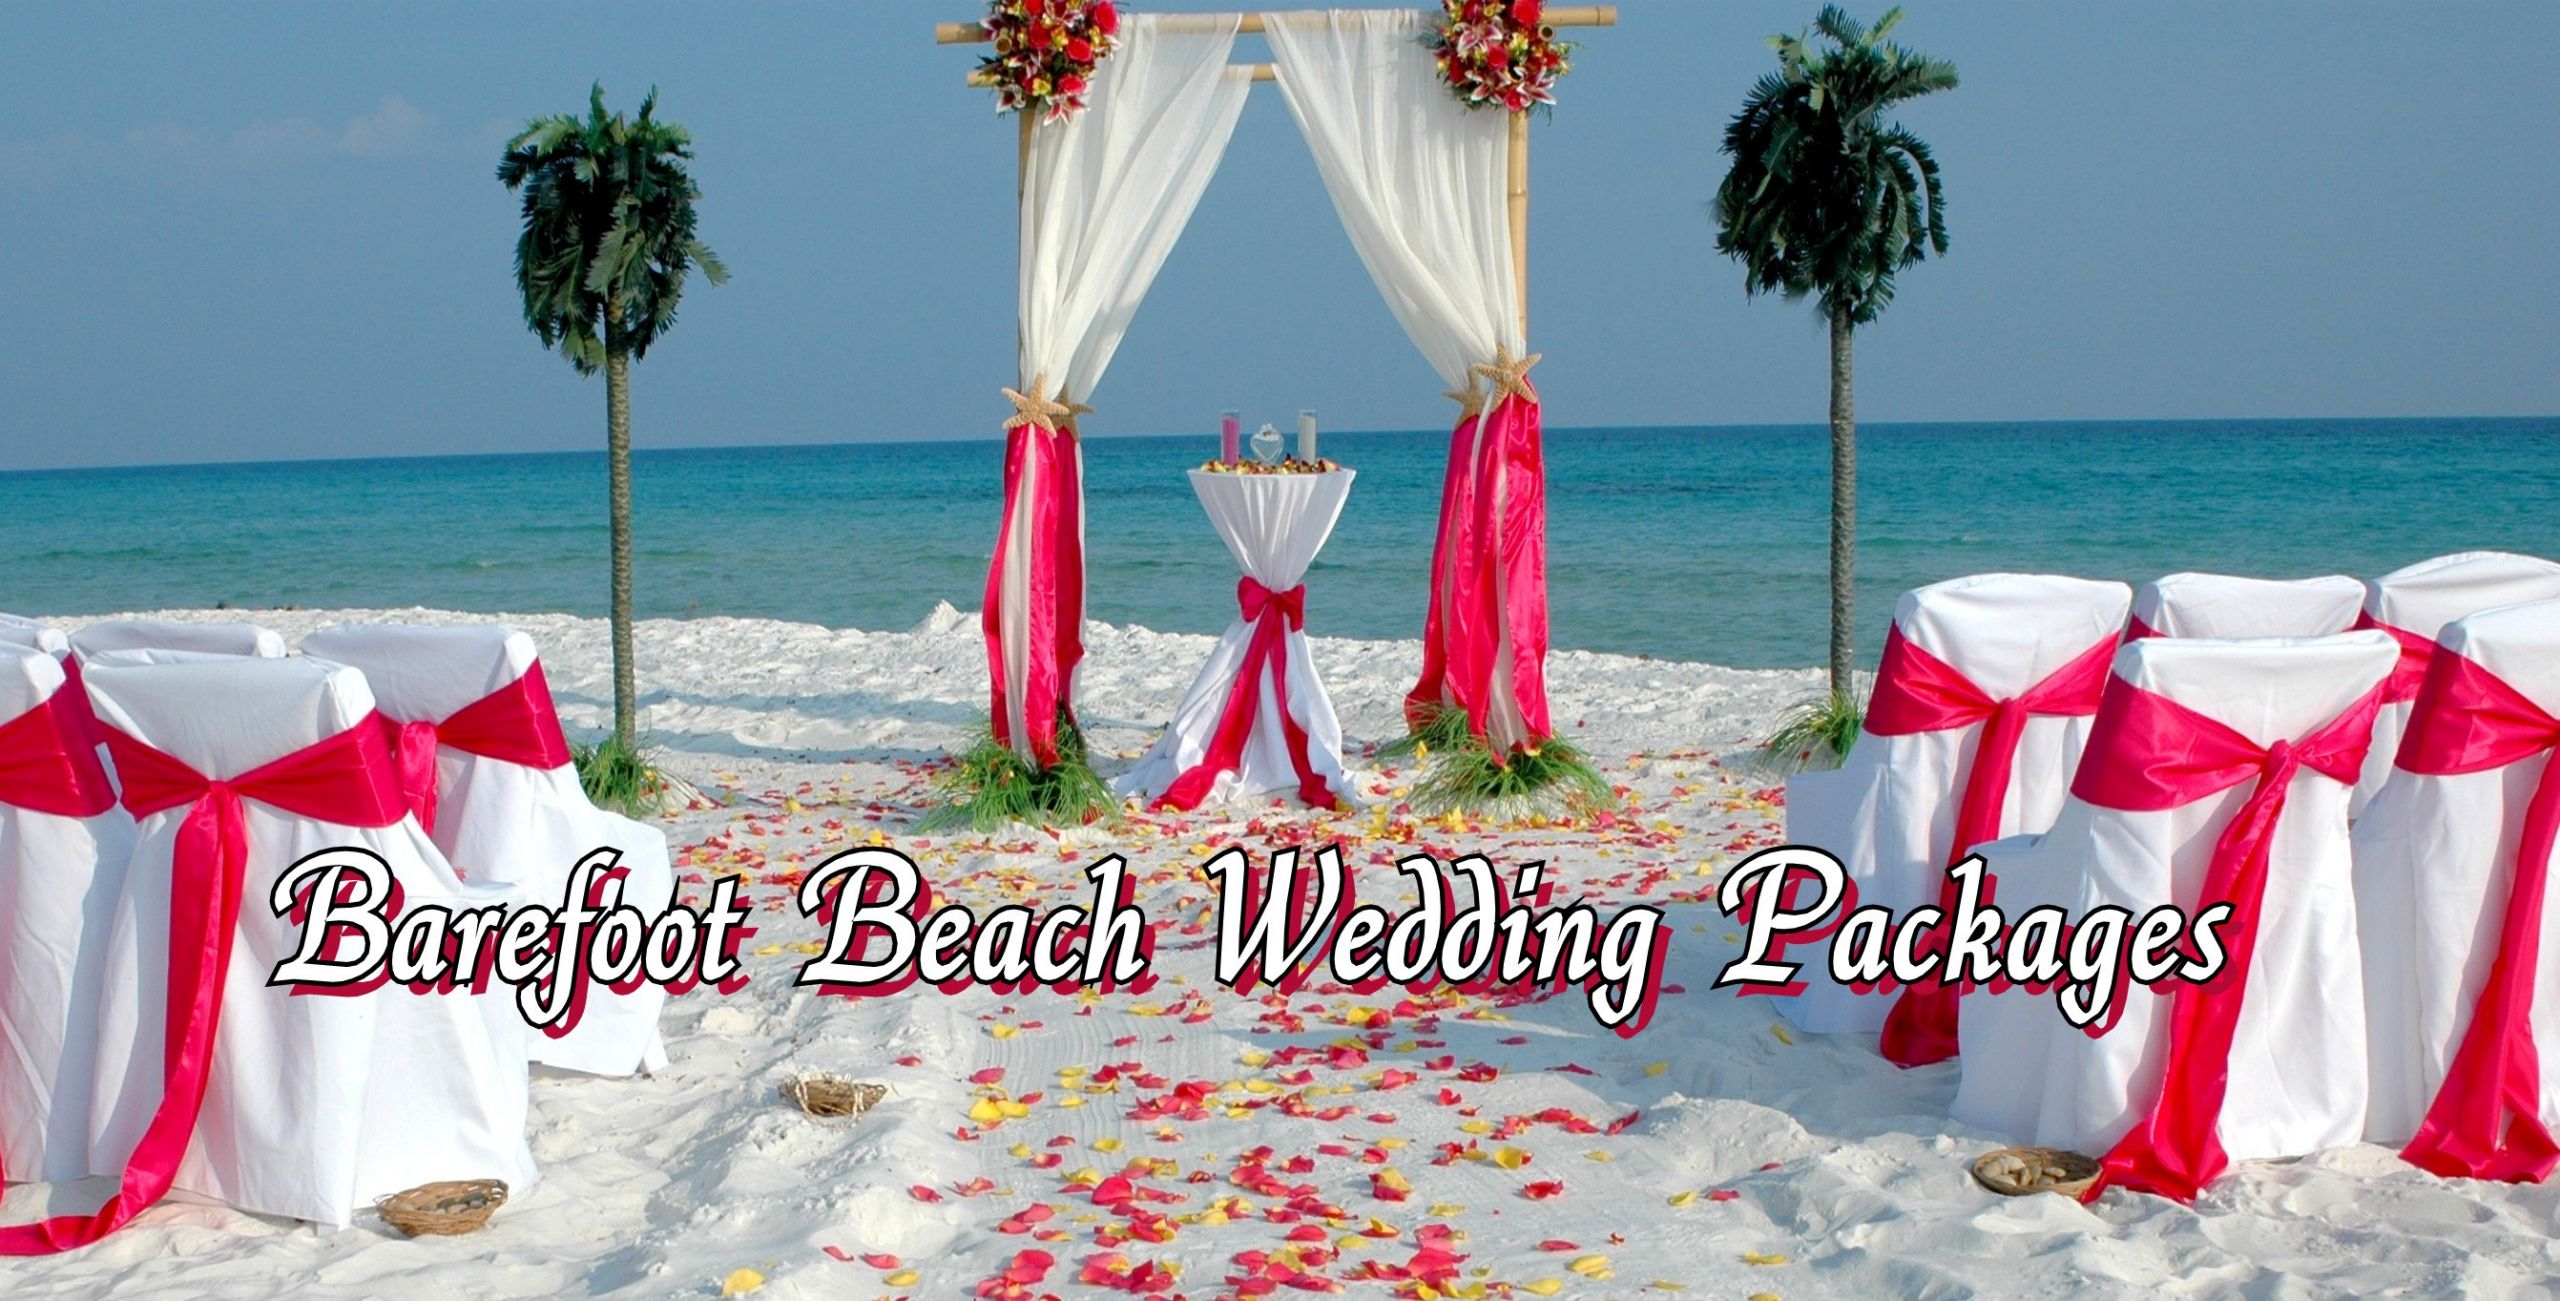 Florida Beach Wedding Packages
 Florida Barefoot Bamboo Arbor Beach Wedding Packages